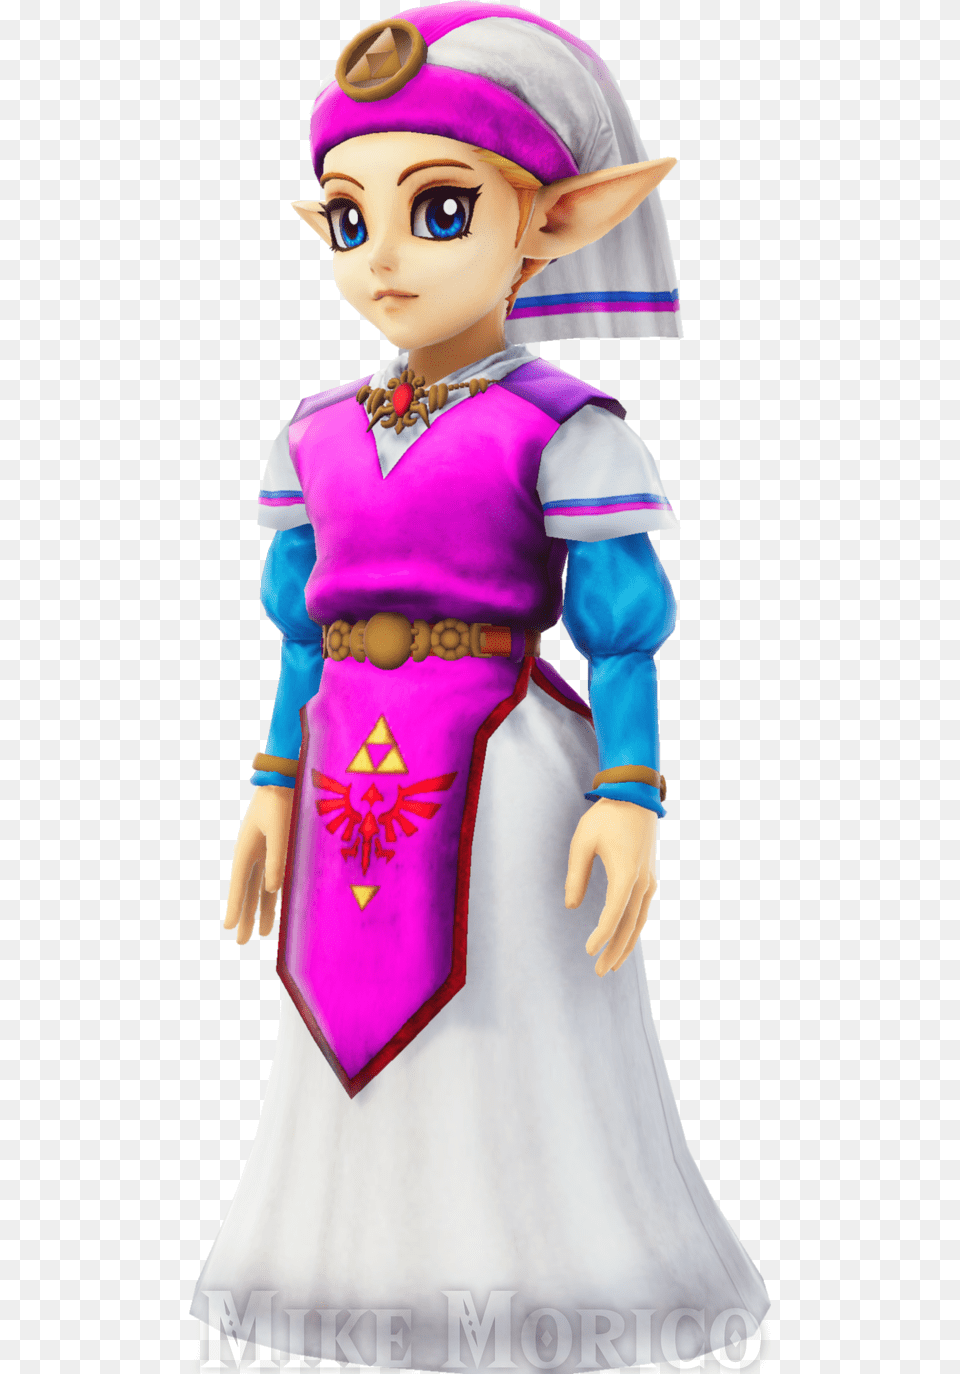 Transparent Princess Zelda Young Princess Zelda Mod, Doll, Toy, Figurine, Face Png